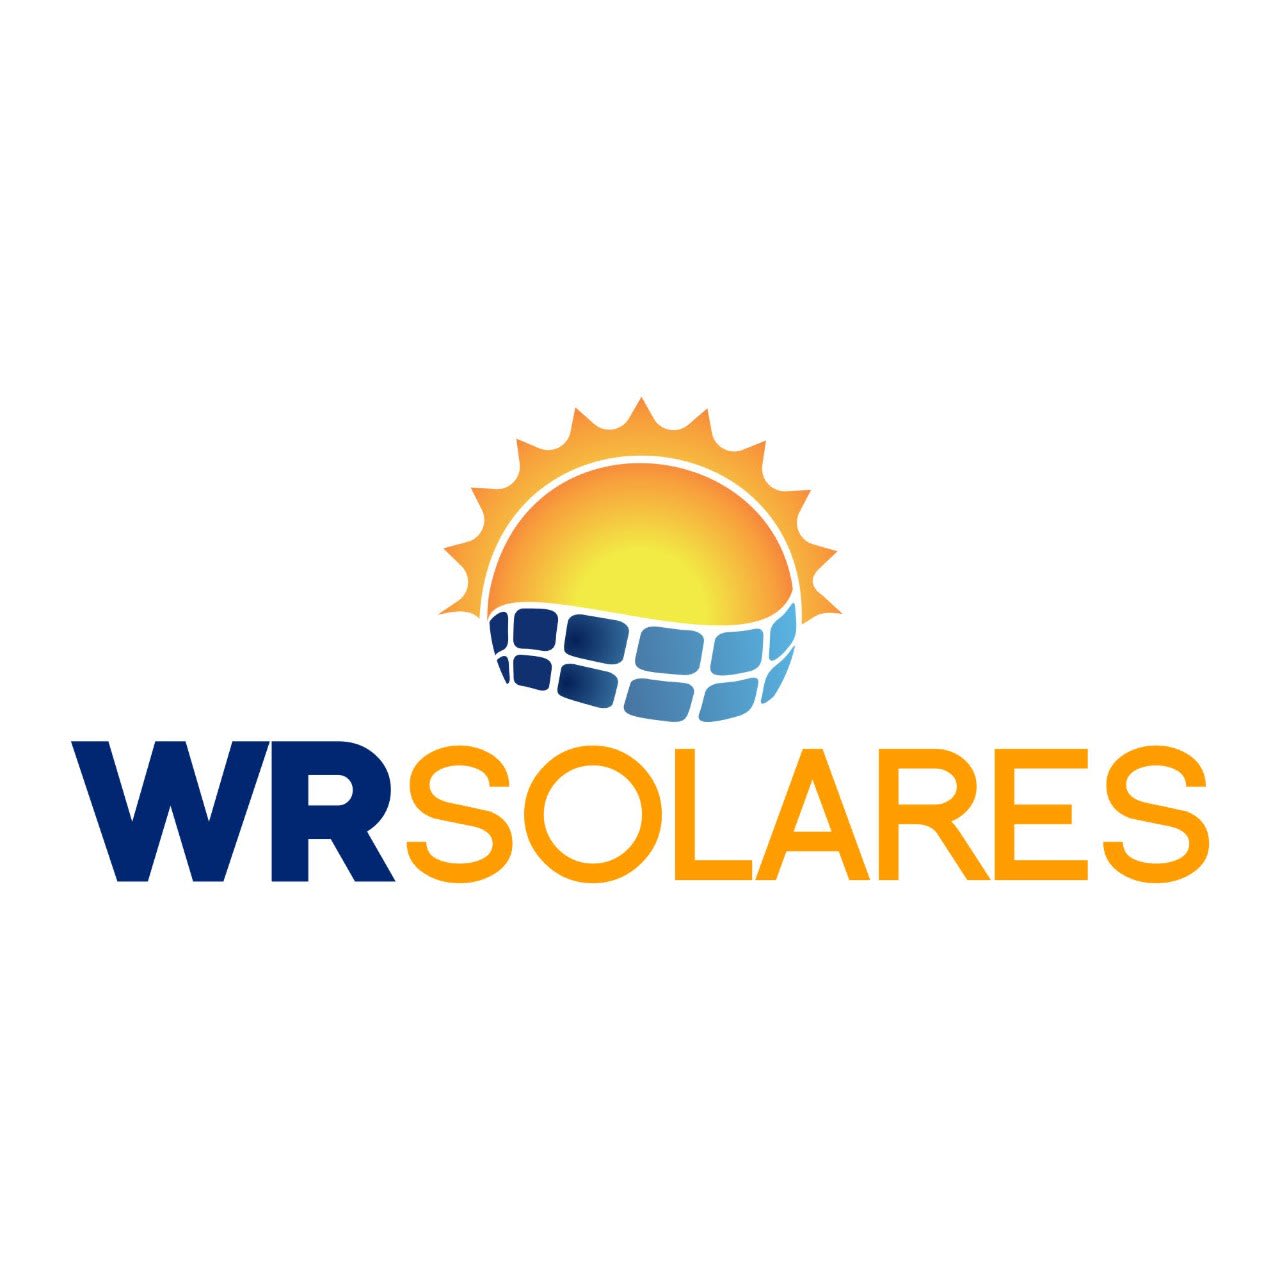 WR Solares